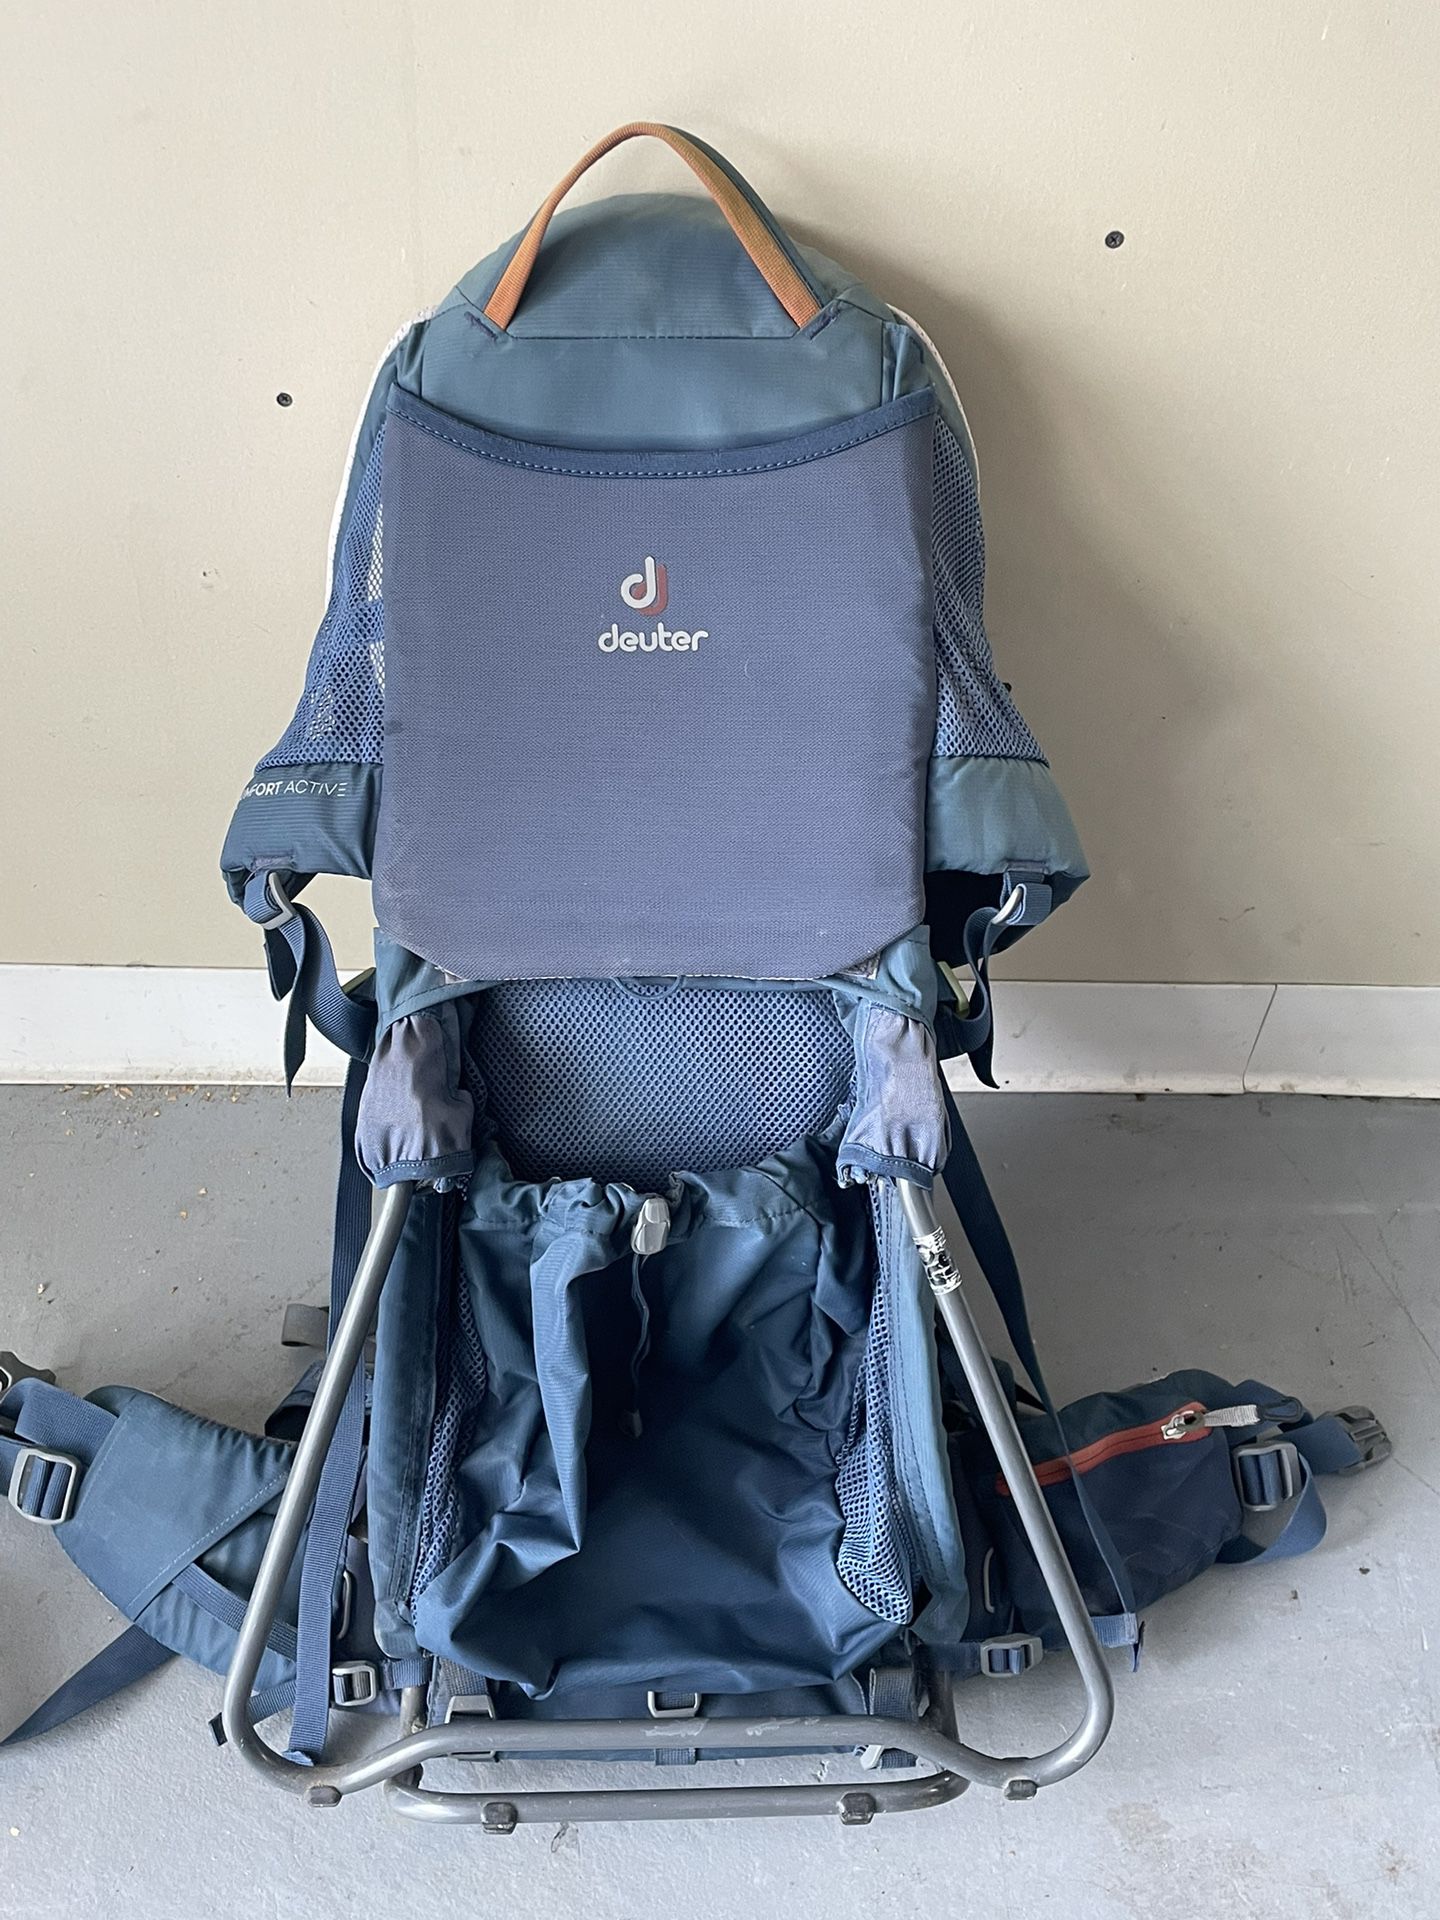 Deuter Child Baby Carrier Hiking Backpack